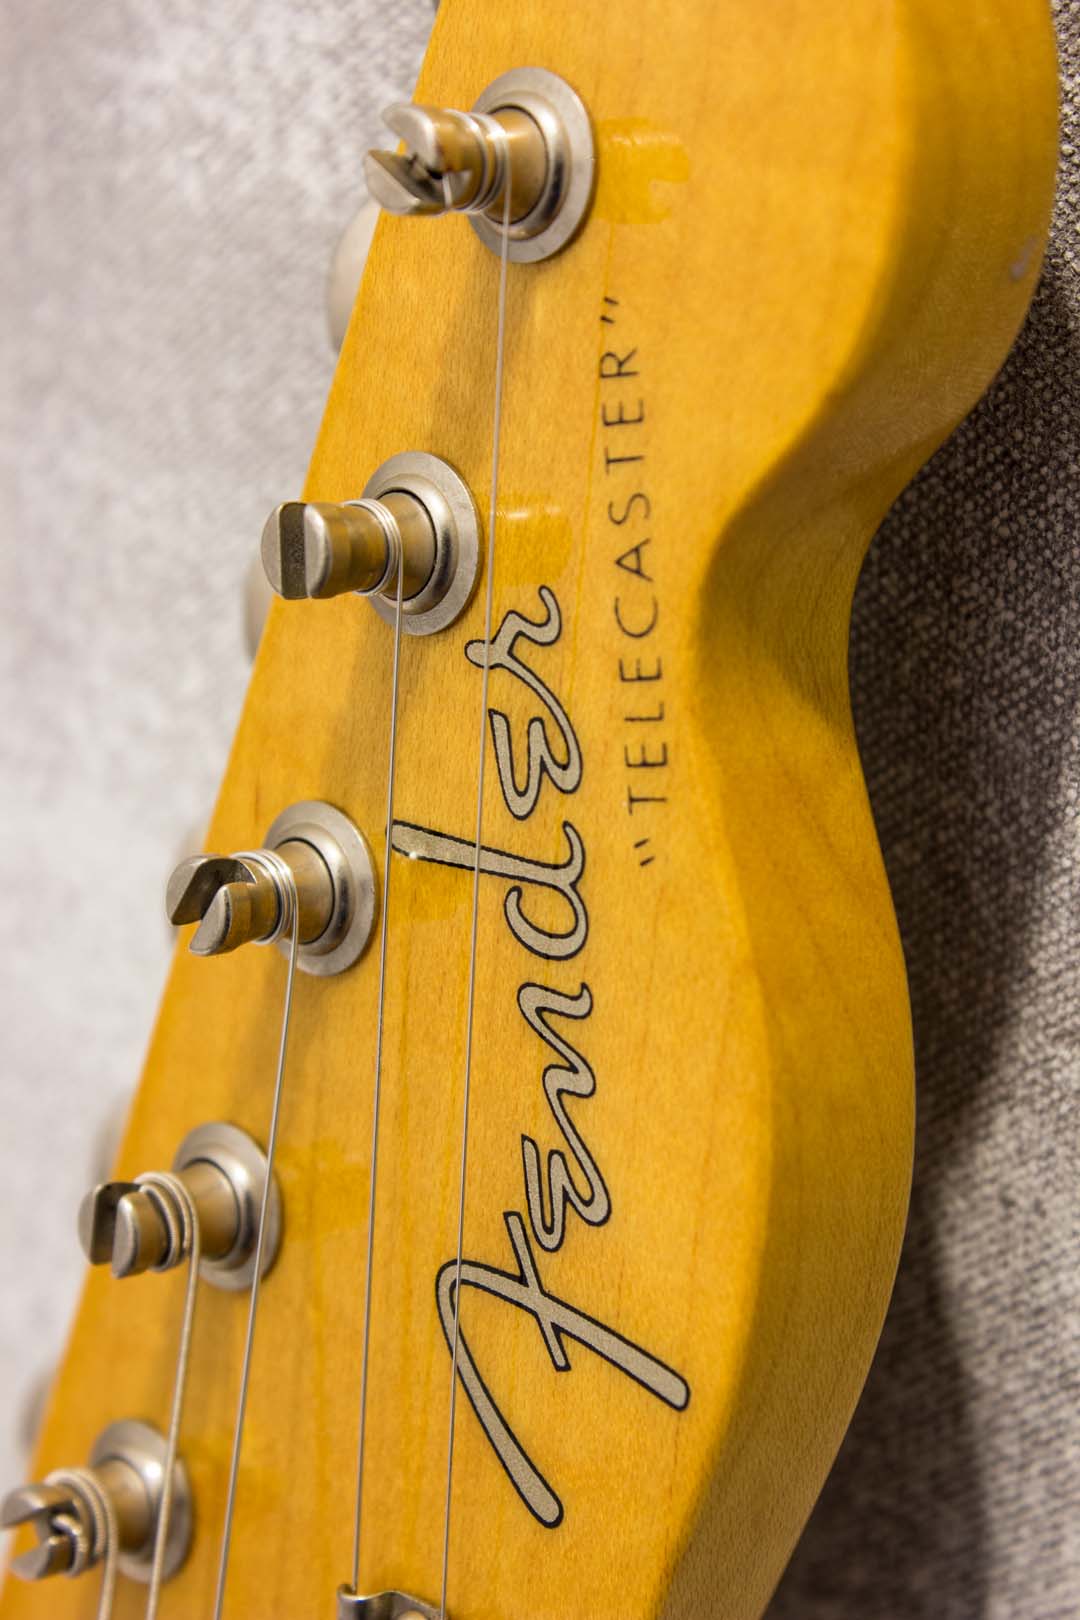 Fender Japan '62 Telecaster TL62B Double Bound Black 2012